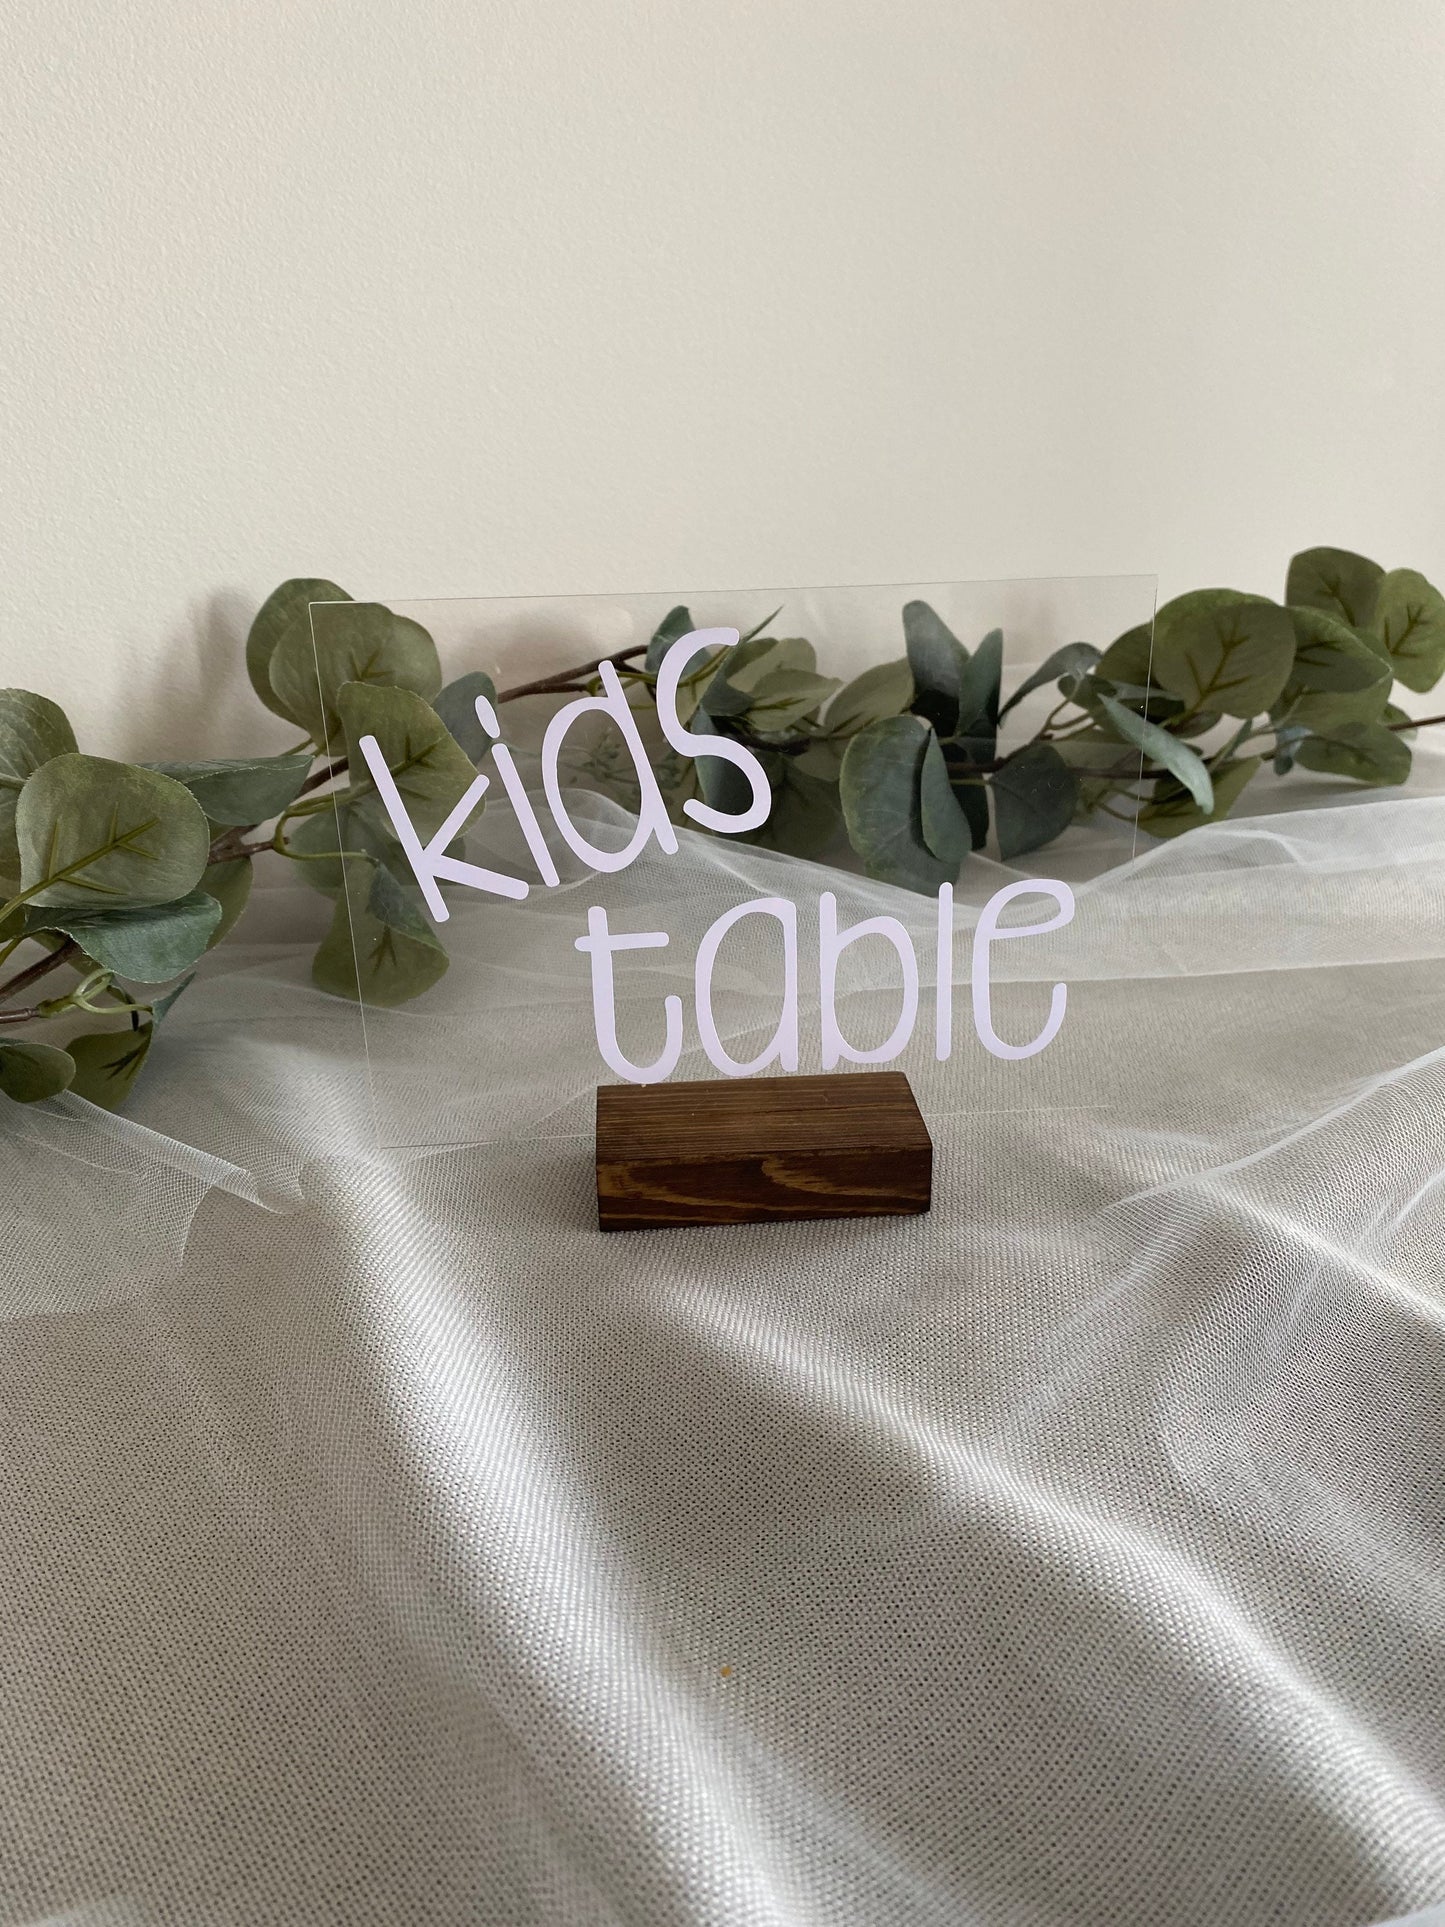 Acrylic Kids Table Sign